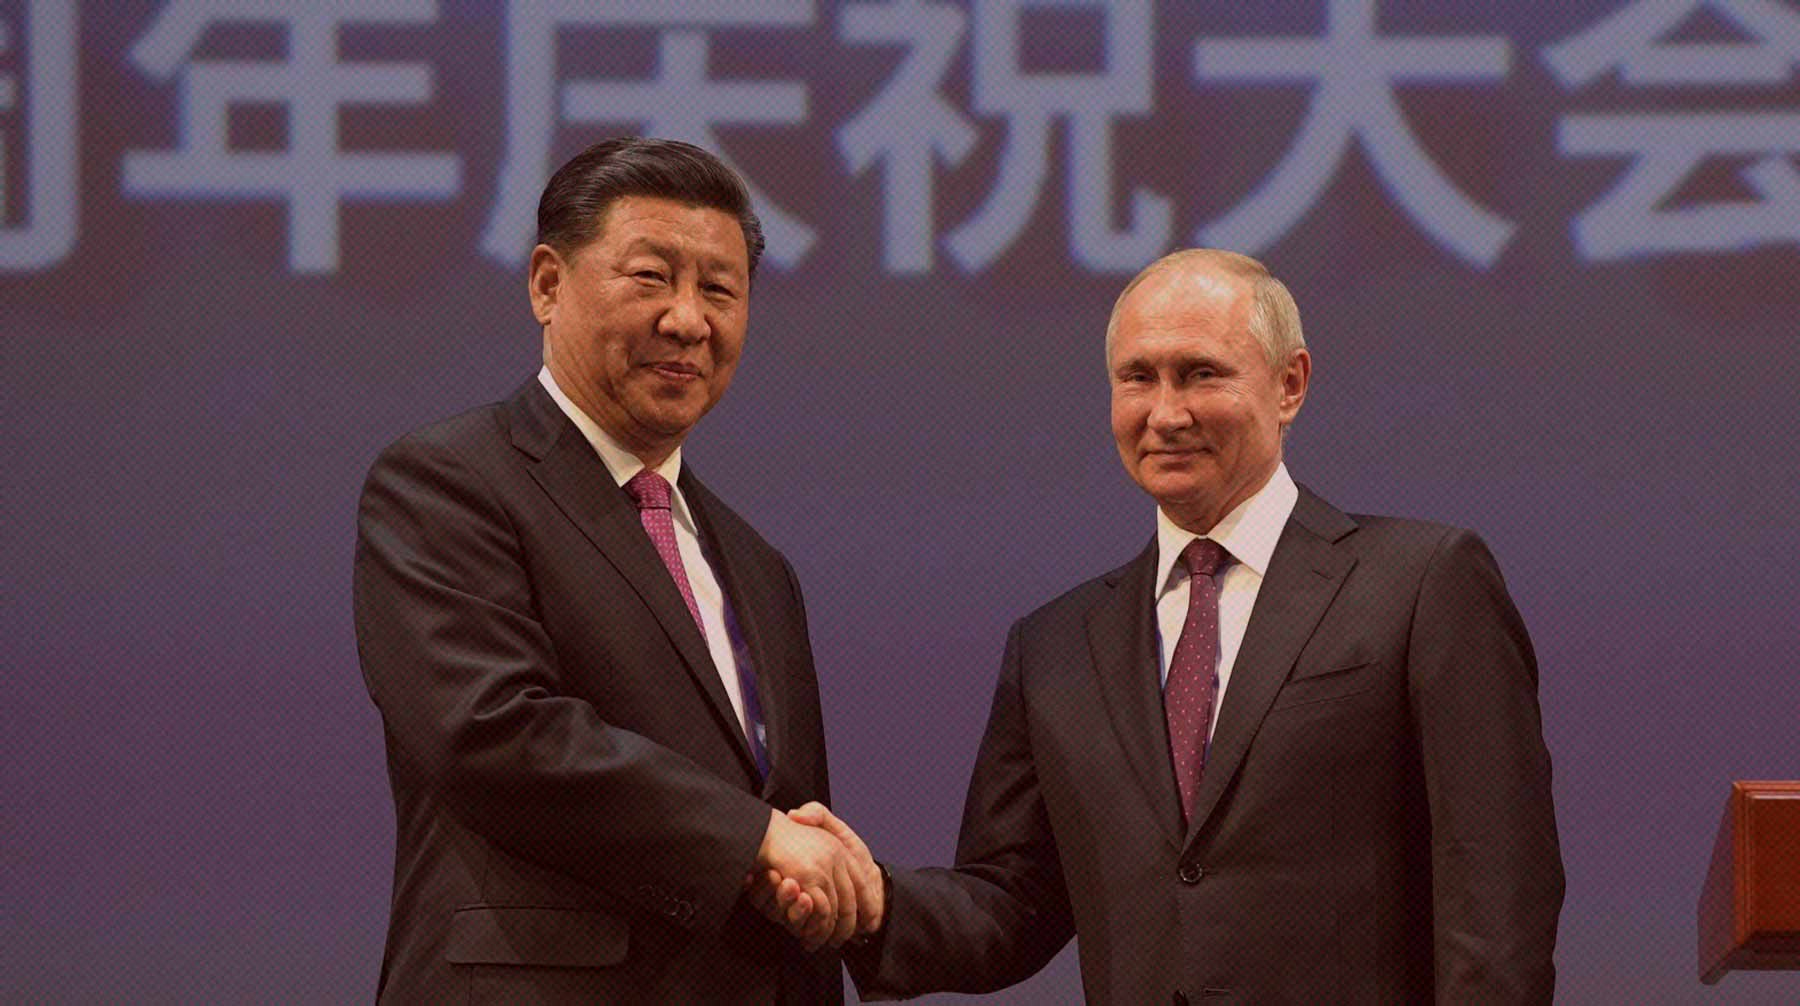 Dailystorm - Путин прилетел в Пекин на церемонию открытия Олимпиады и на встречу с лидером КНР Си Цзиньпином